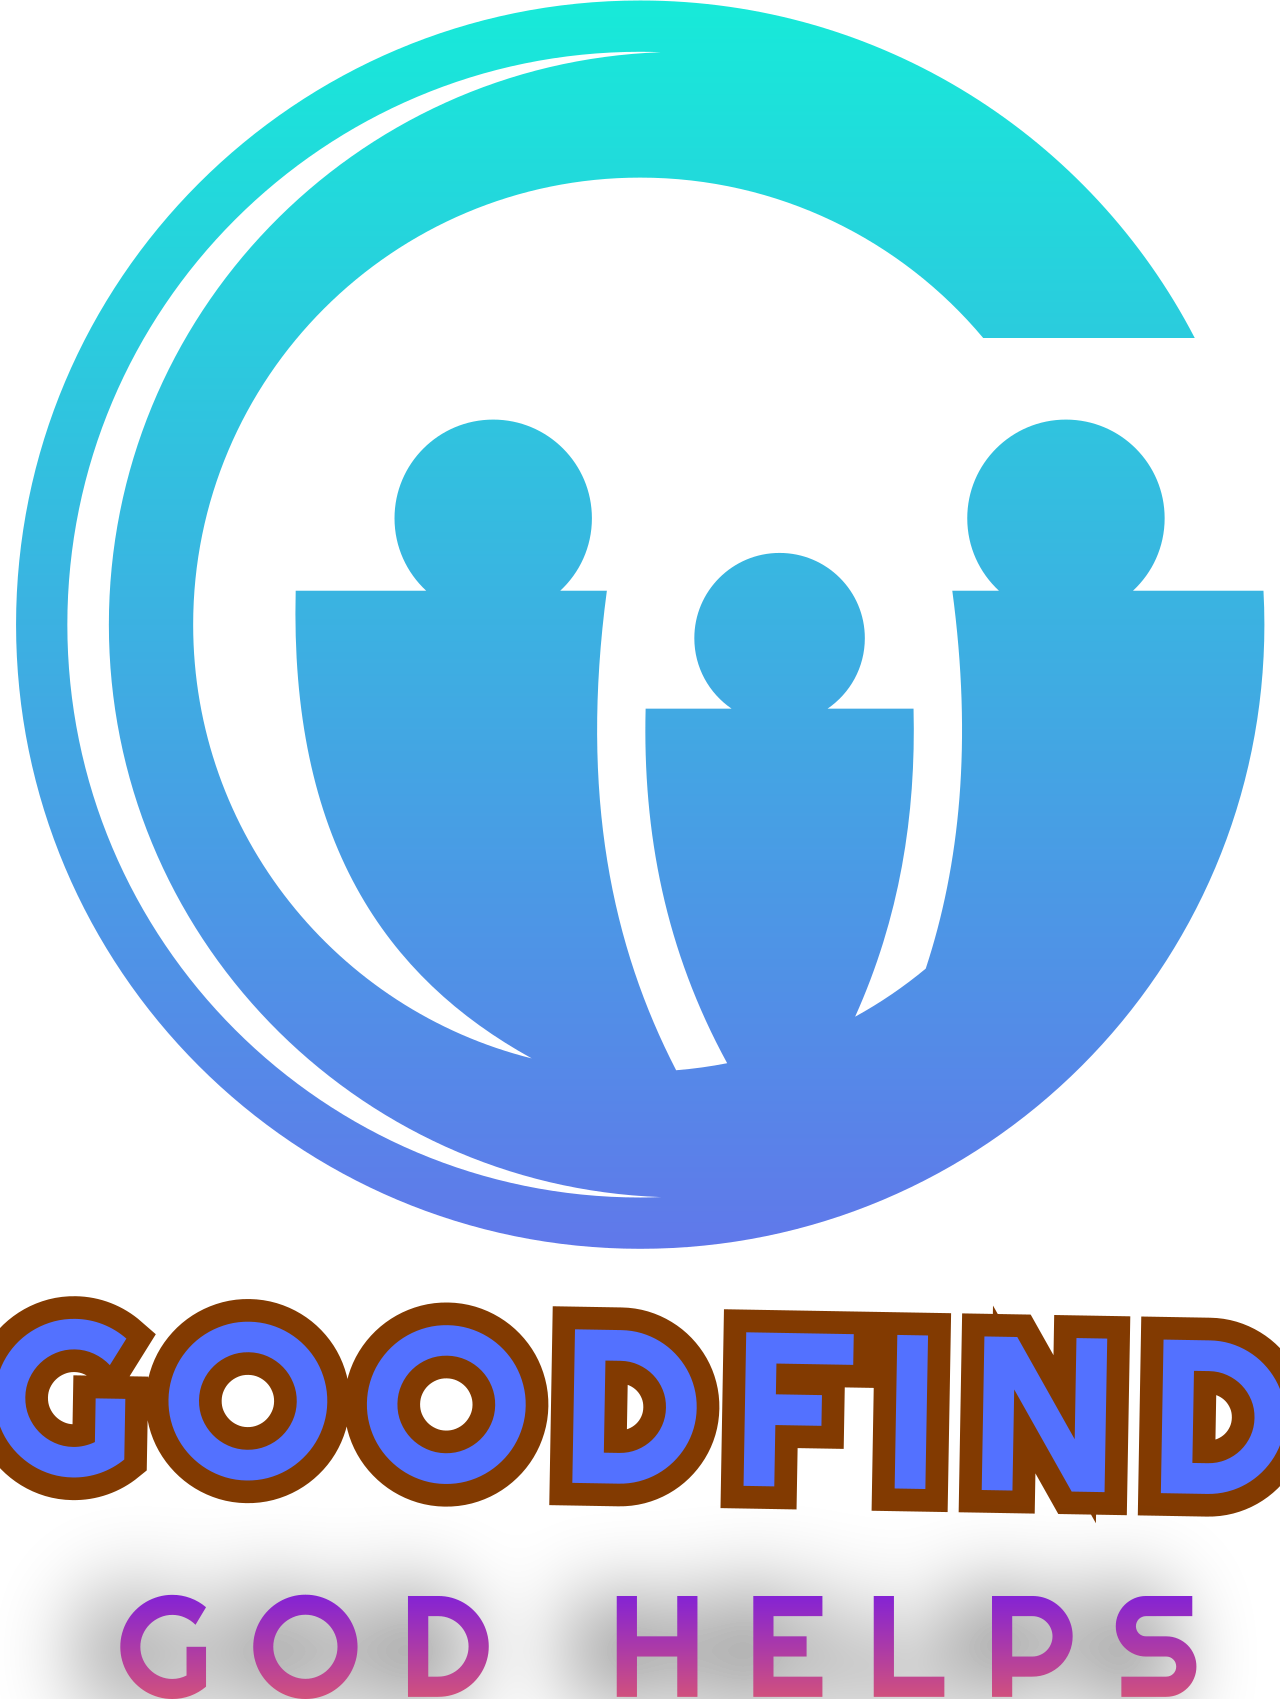 GOODFIND's logo